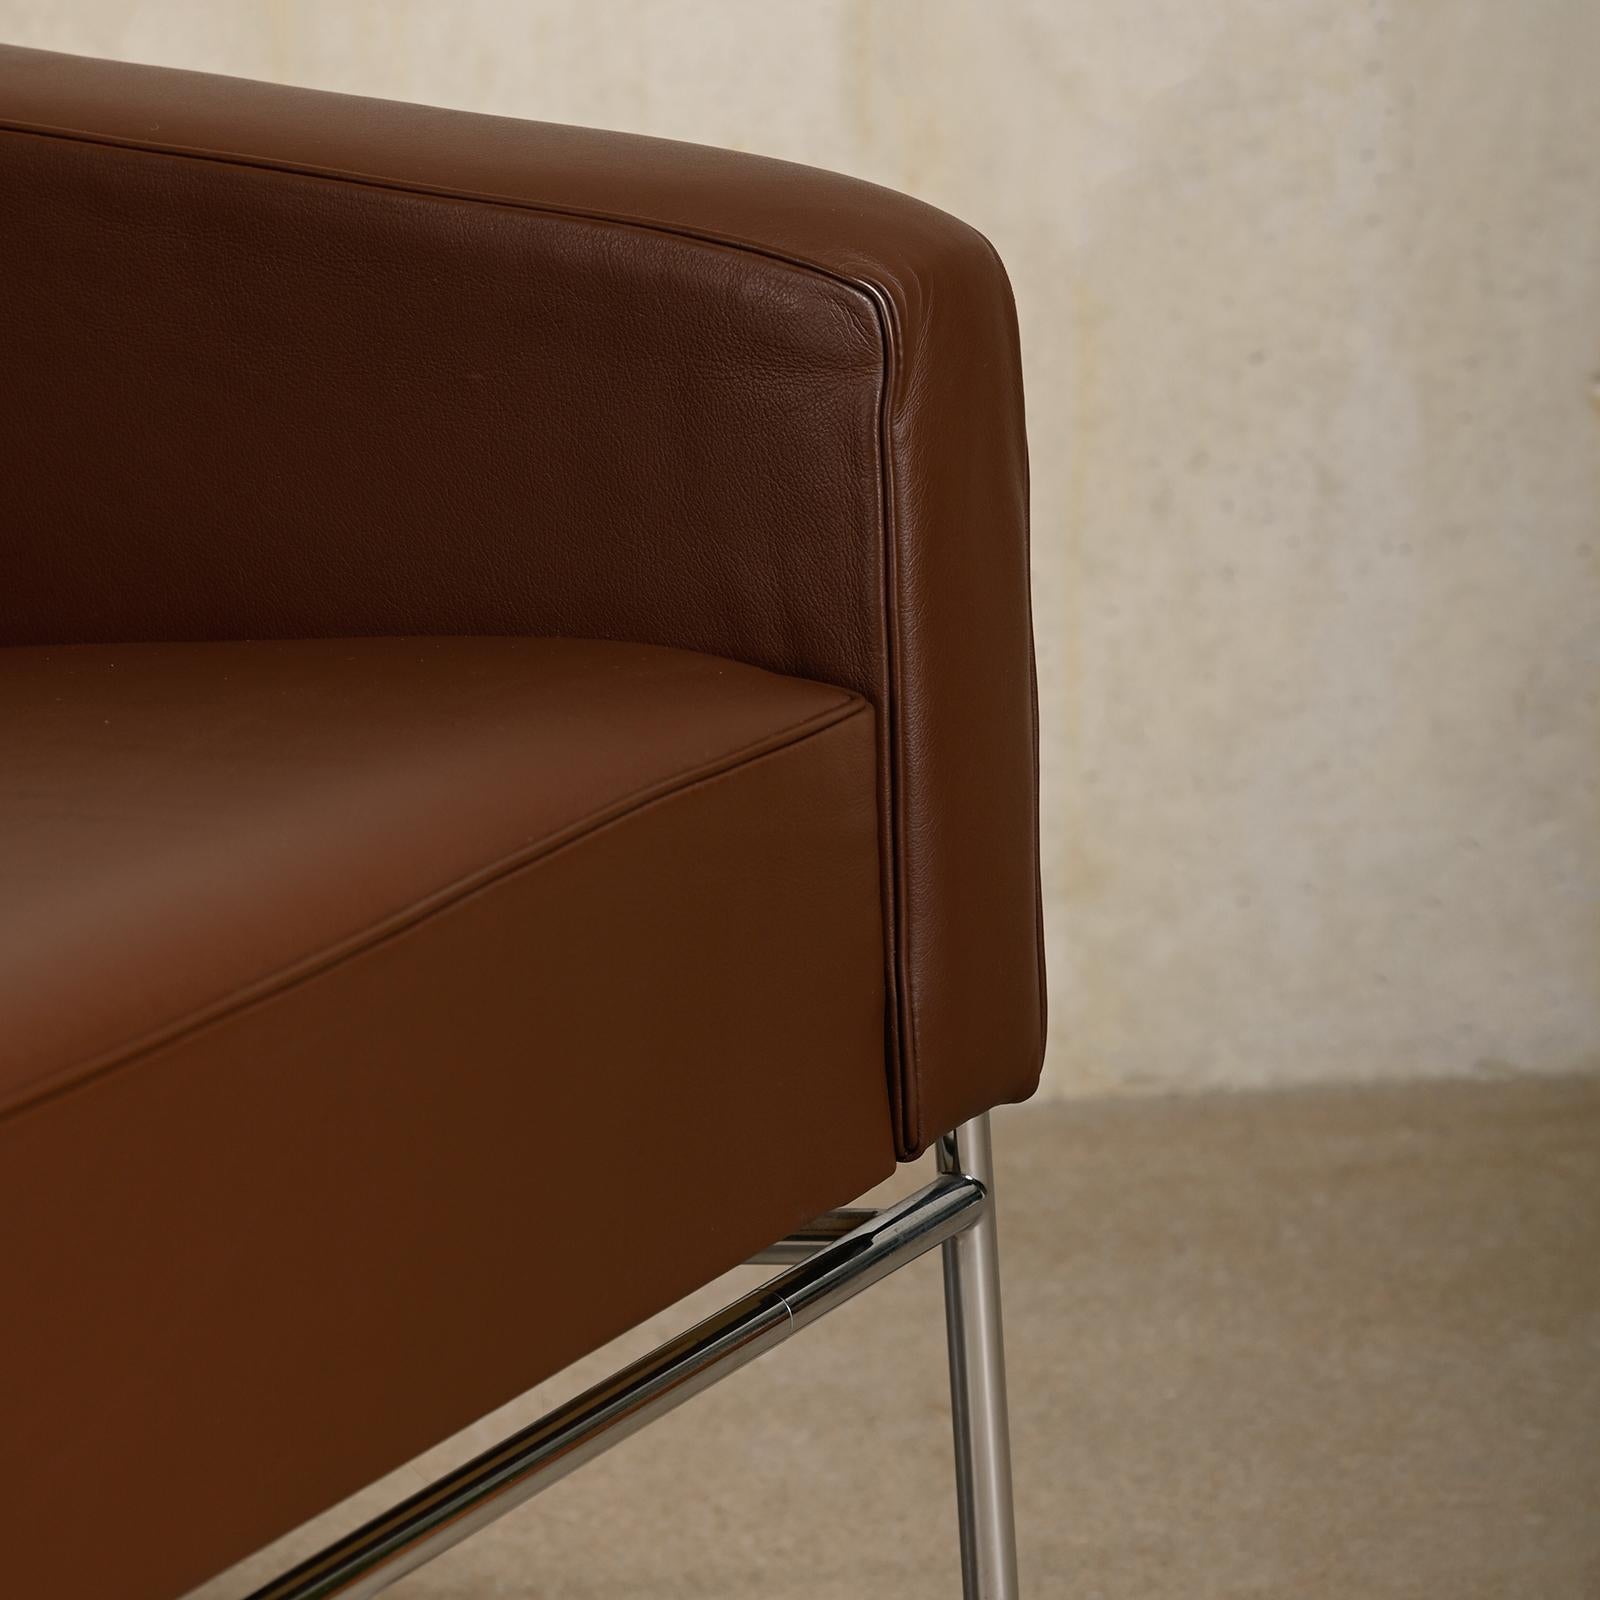 Arne Jacobsen Lounge Chair 3300 Series in Chestnut leather for Fritz Hansen For Sale 7